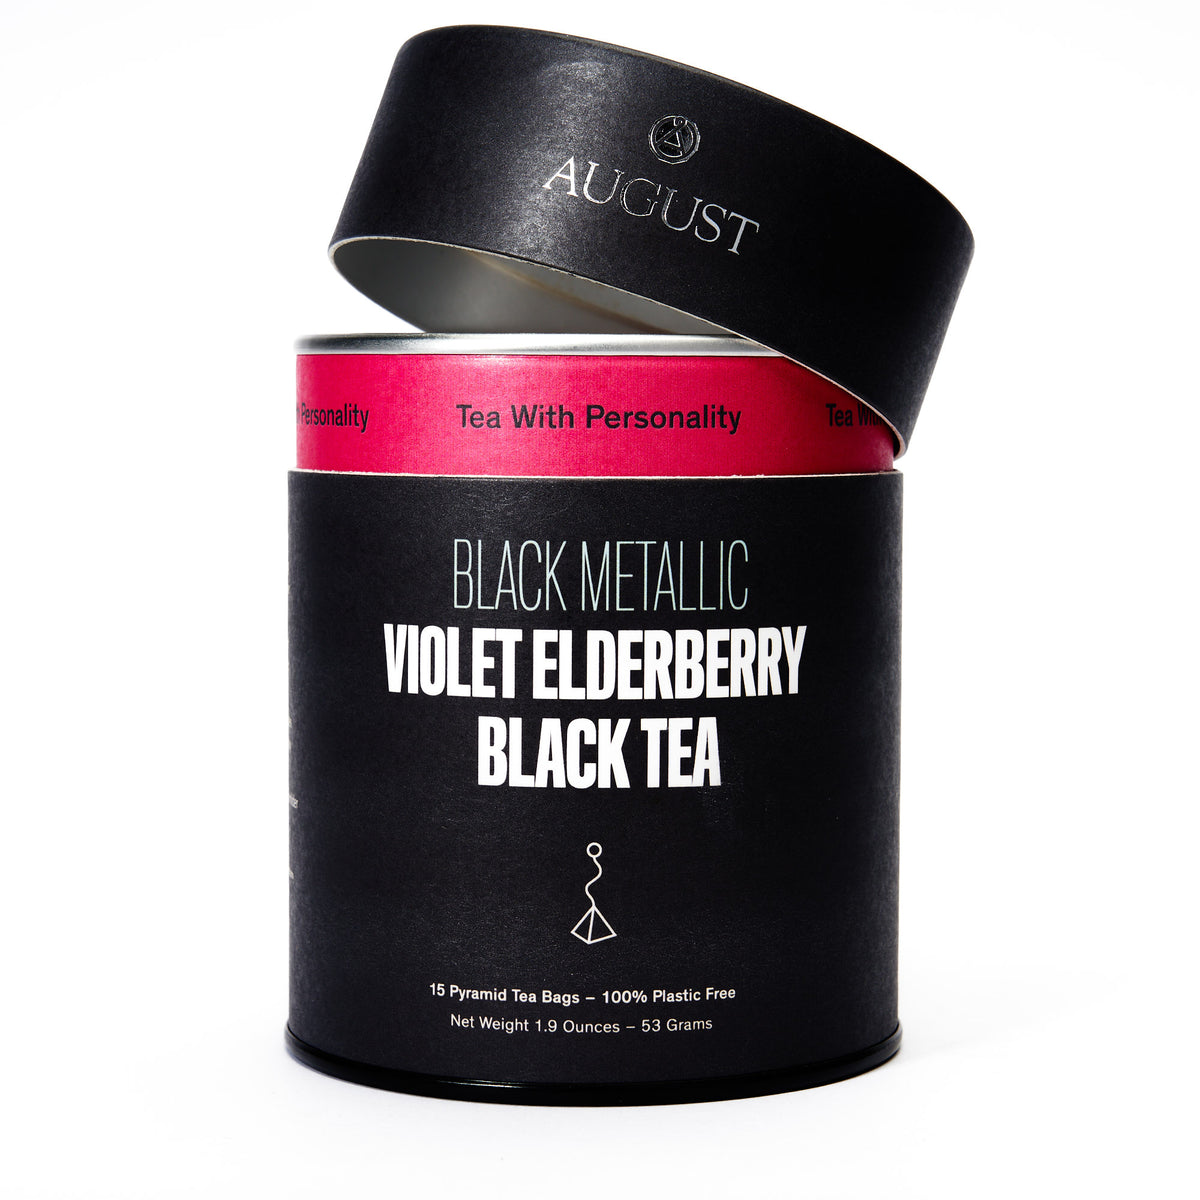 Black Metallic: Violet Elderberry Black Tea (15 Tea Bags)